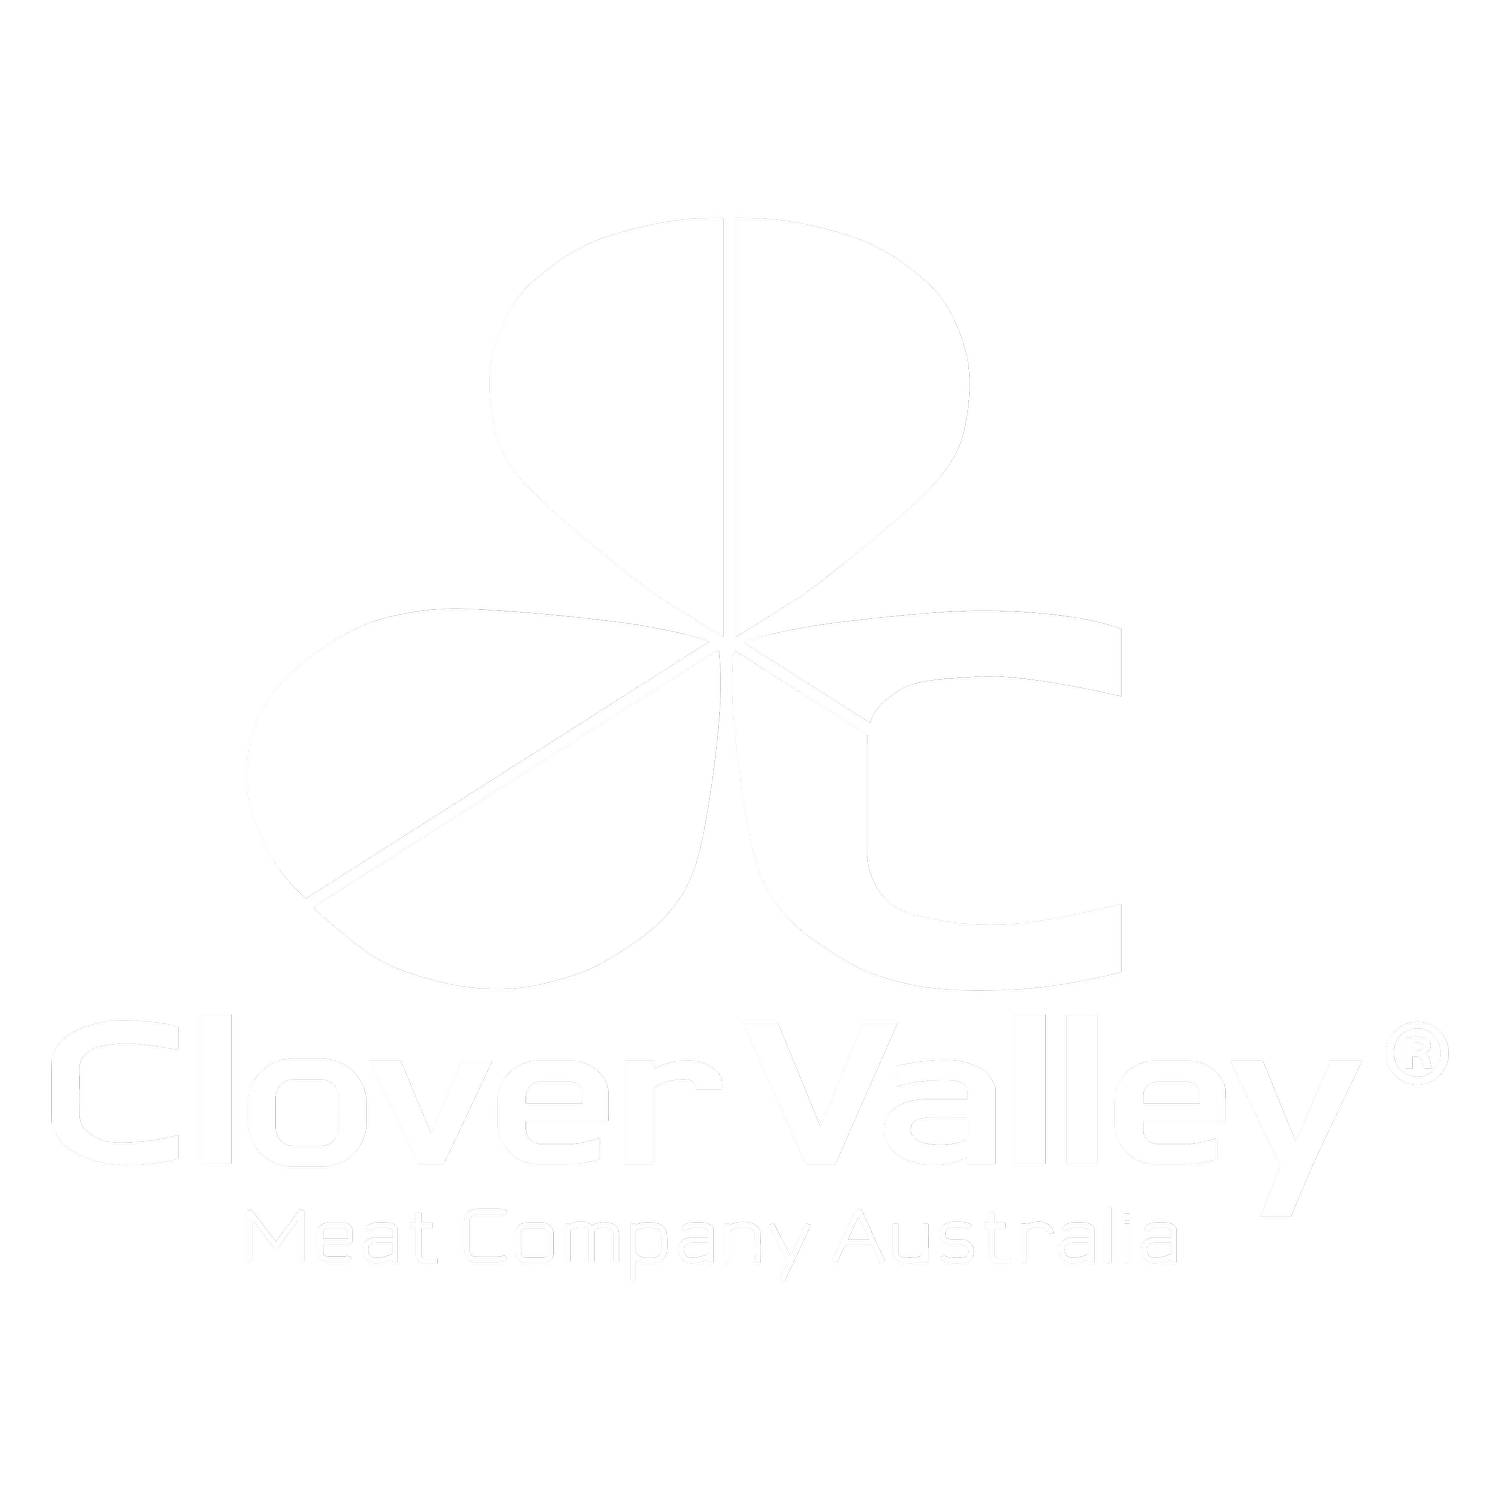 Clover Valley Meat Company Australia